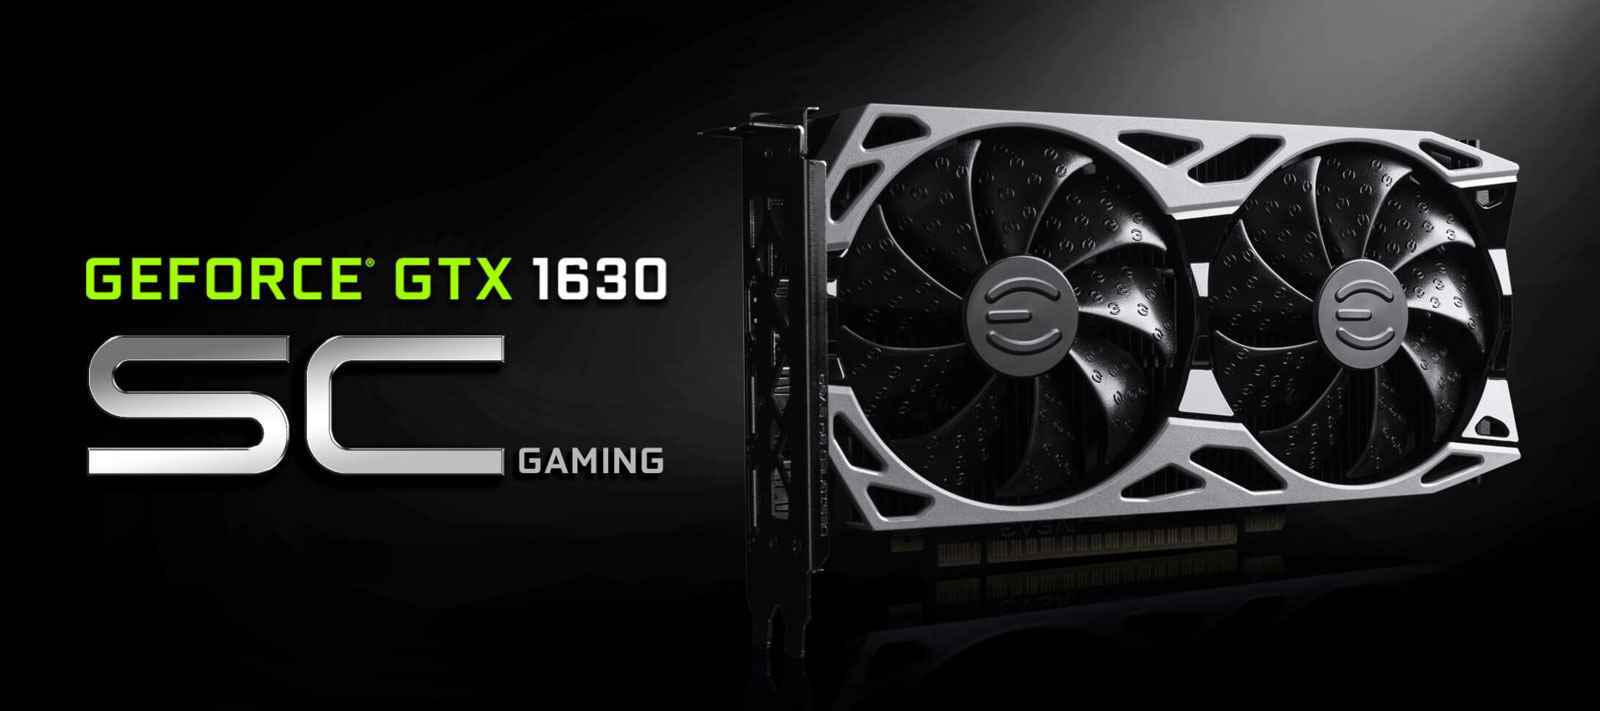 Nvidia GeForce GTX 1630